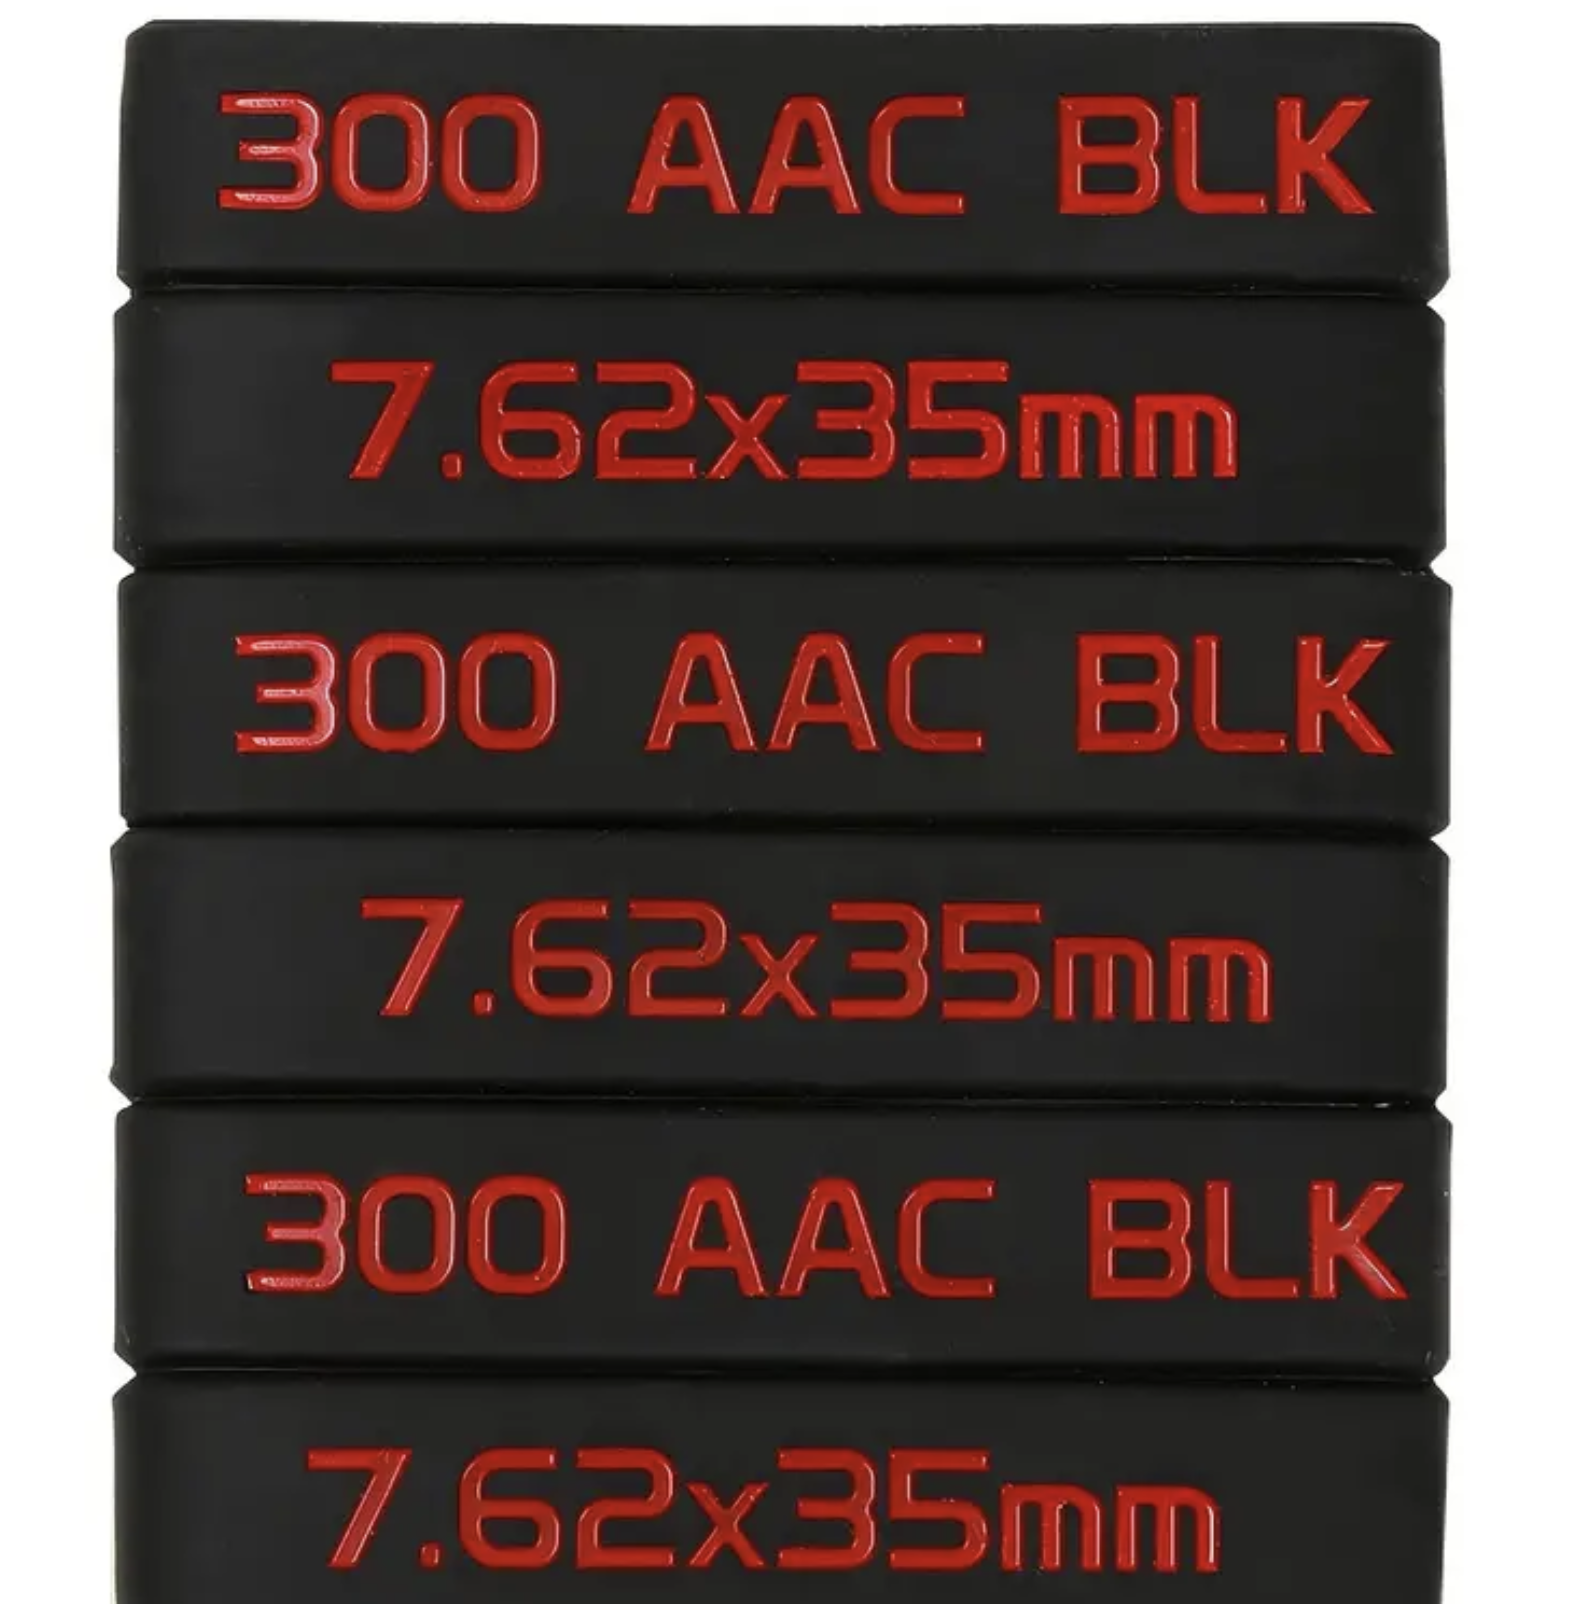 7.62x55mm 300 AAC BLK Magasin Markeringsband - Svart - Röd